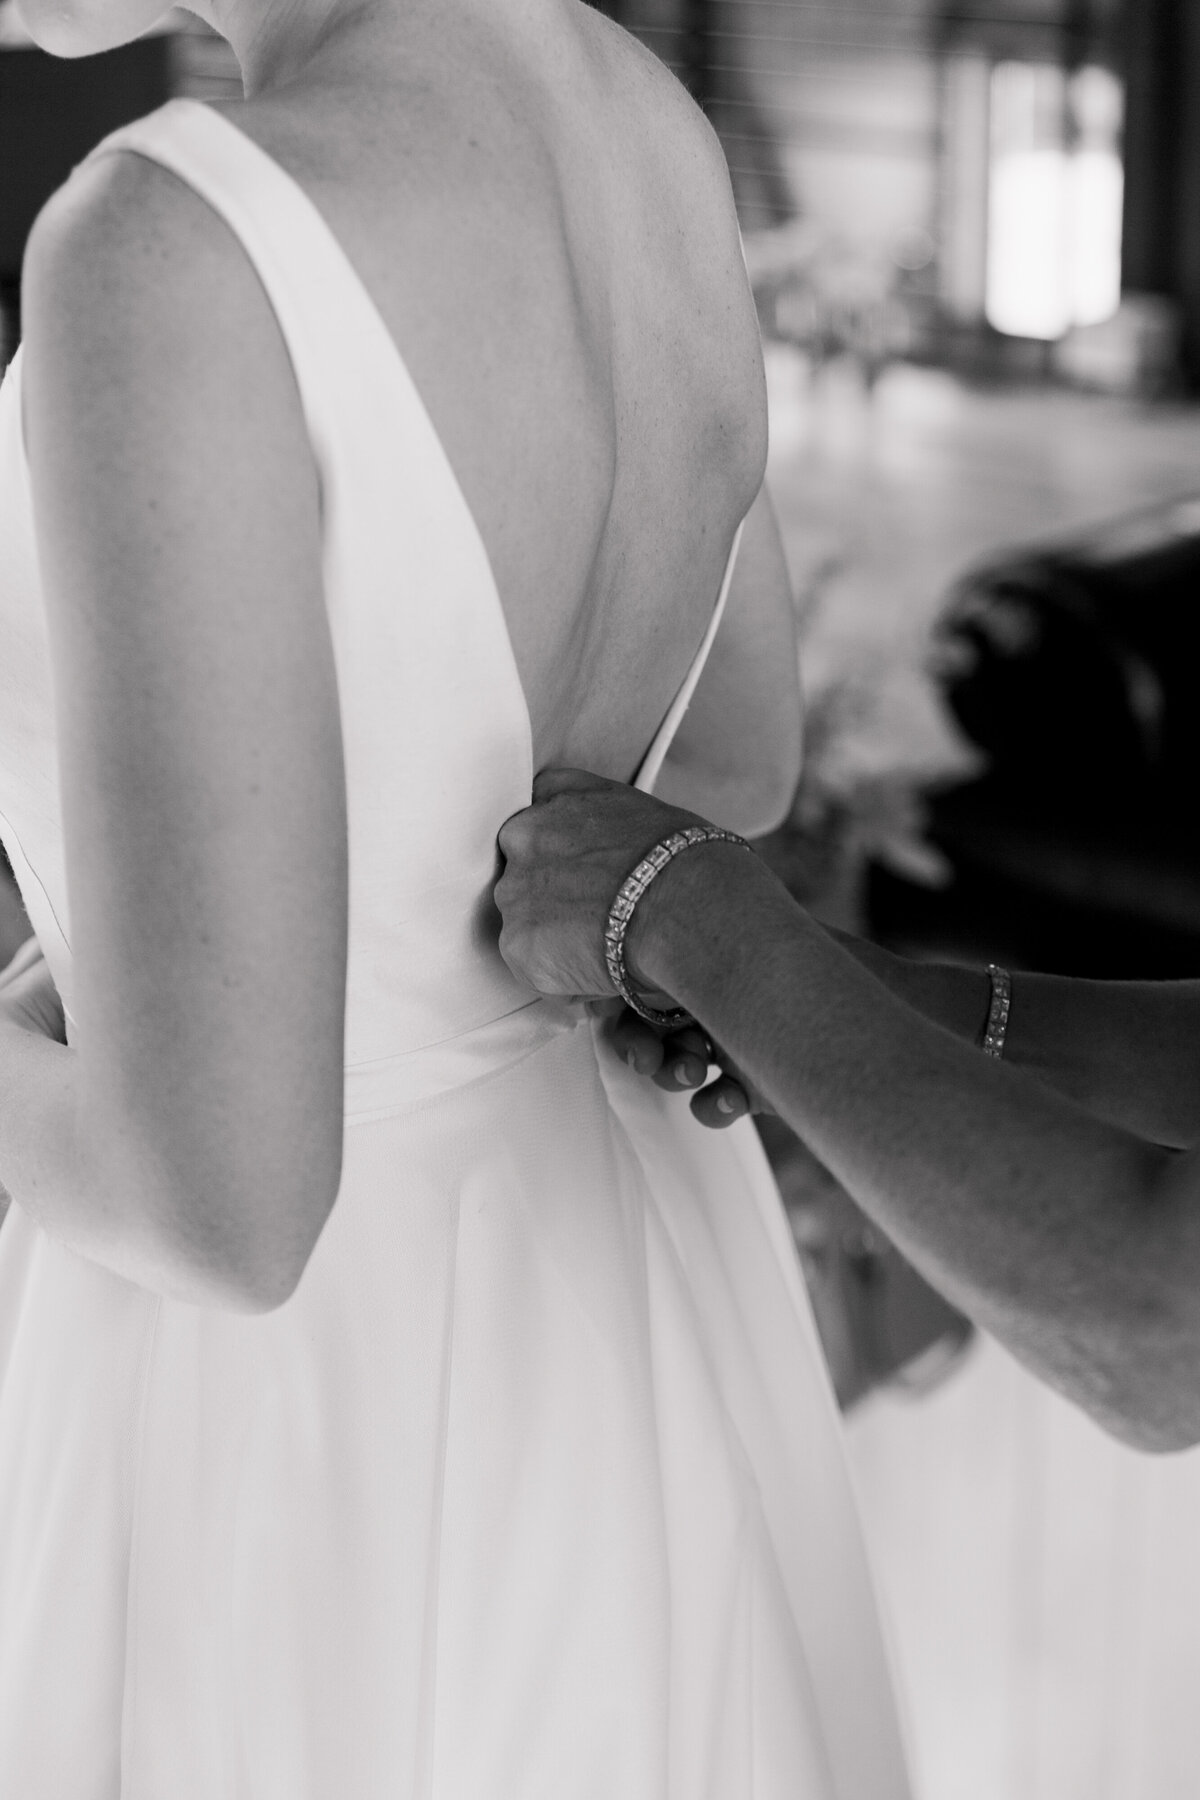 Black and white photo of someone zipping up bride's wedding dress